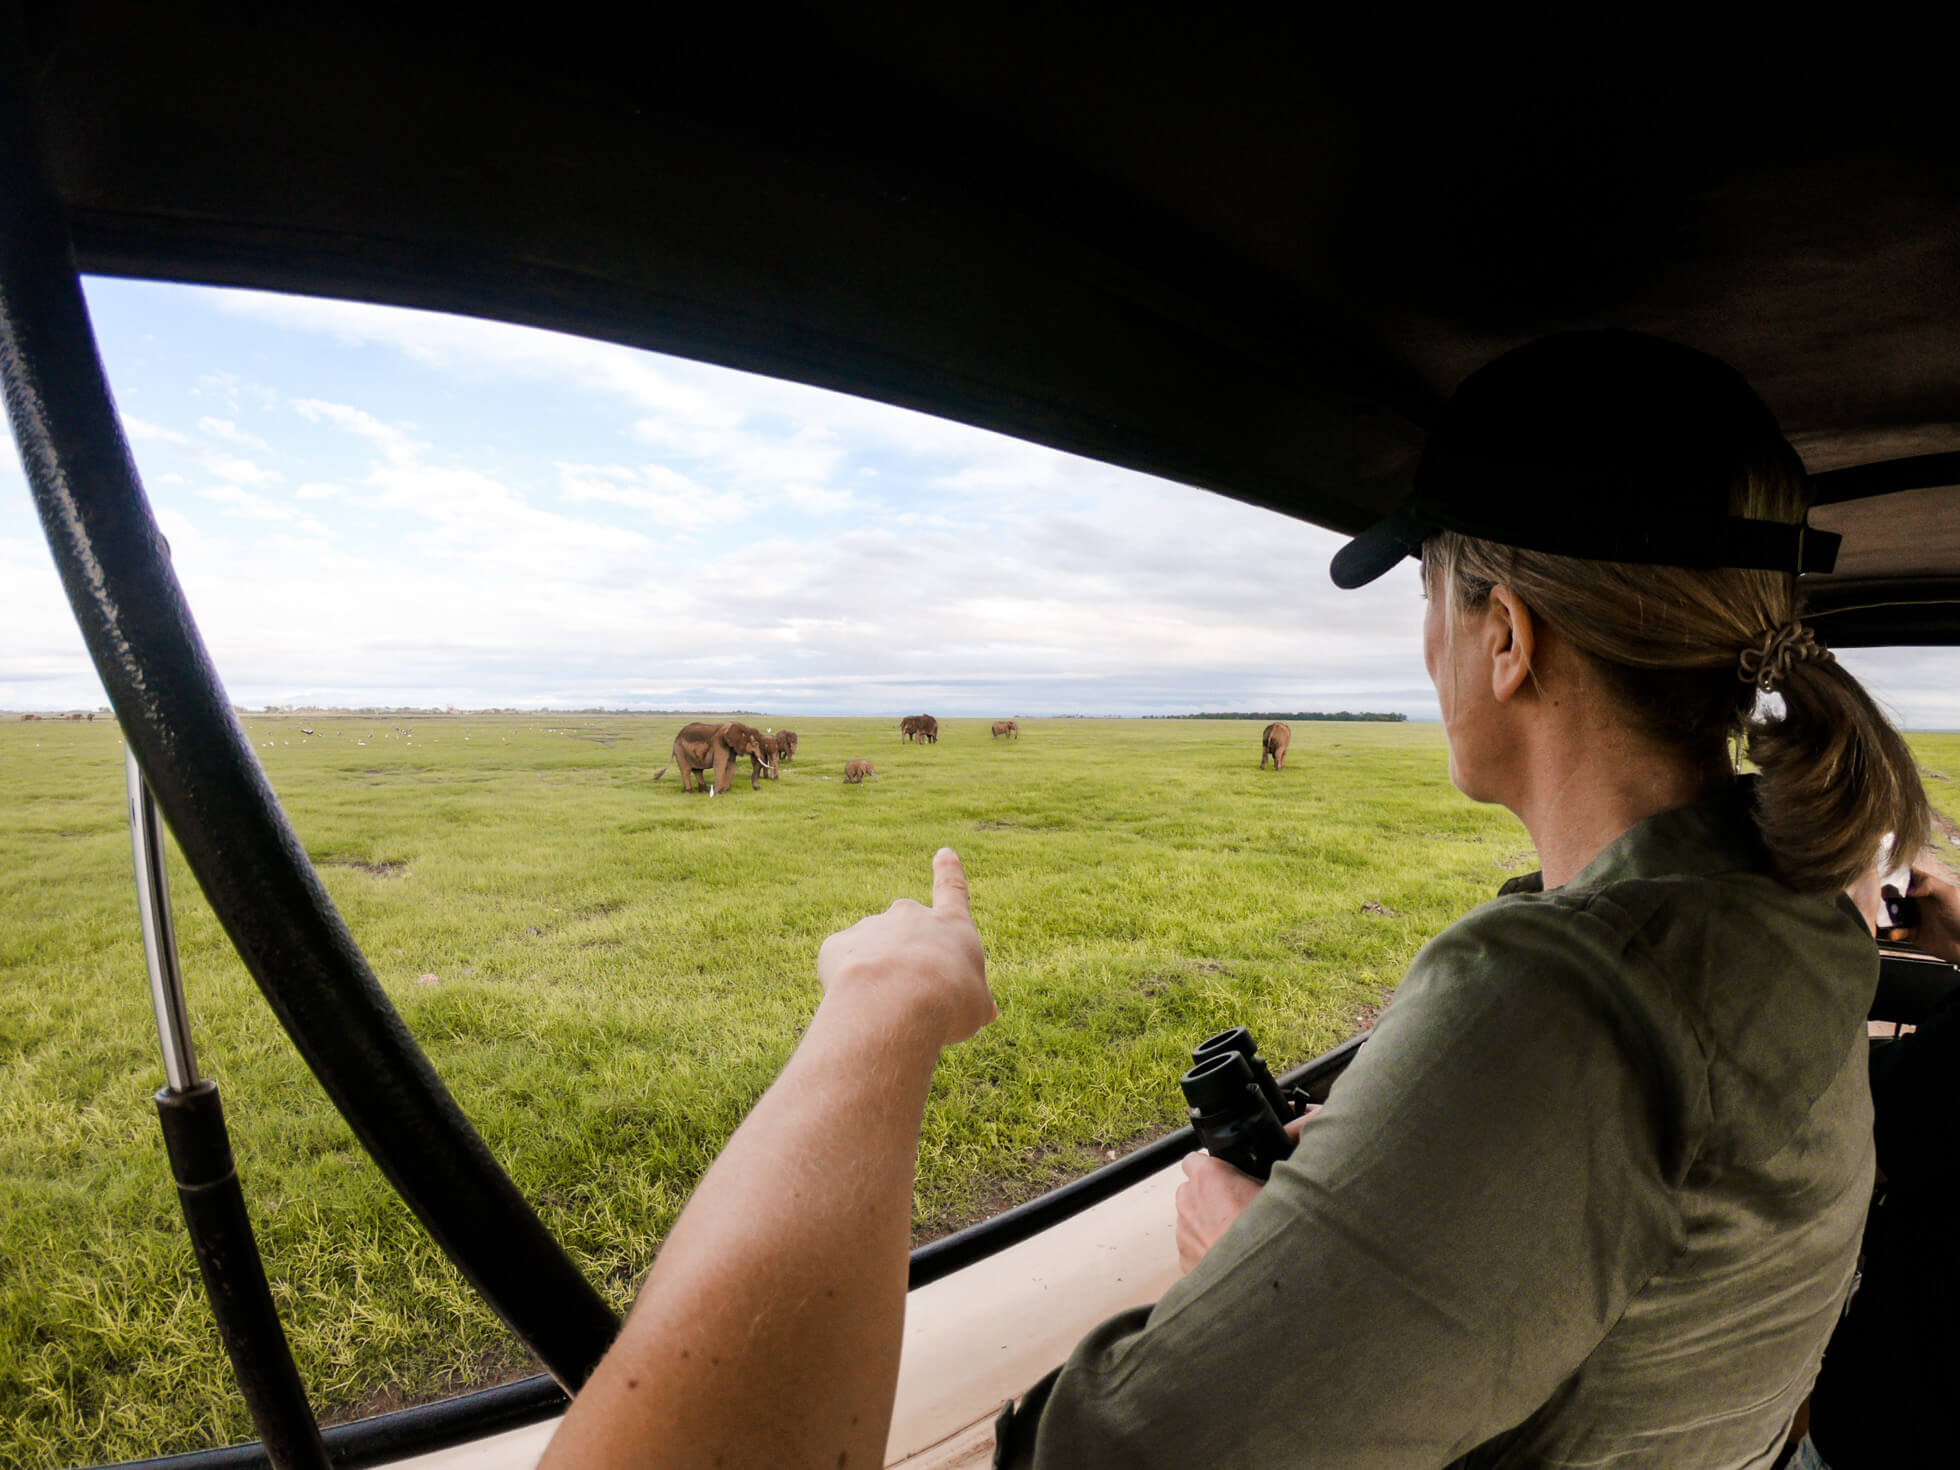 Five days, three national parks, one epic safari in Kenya